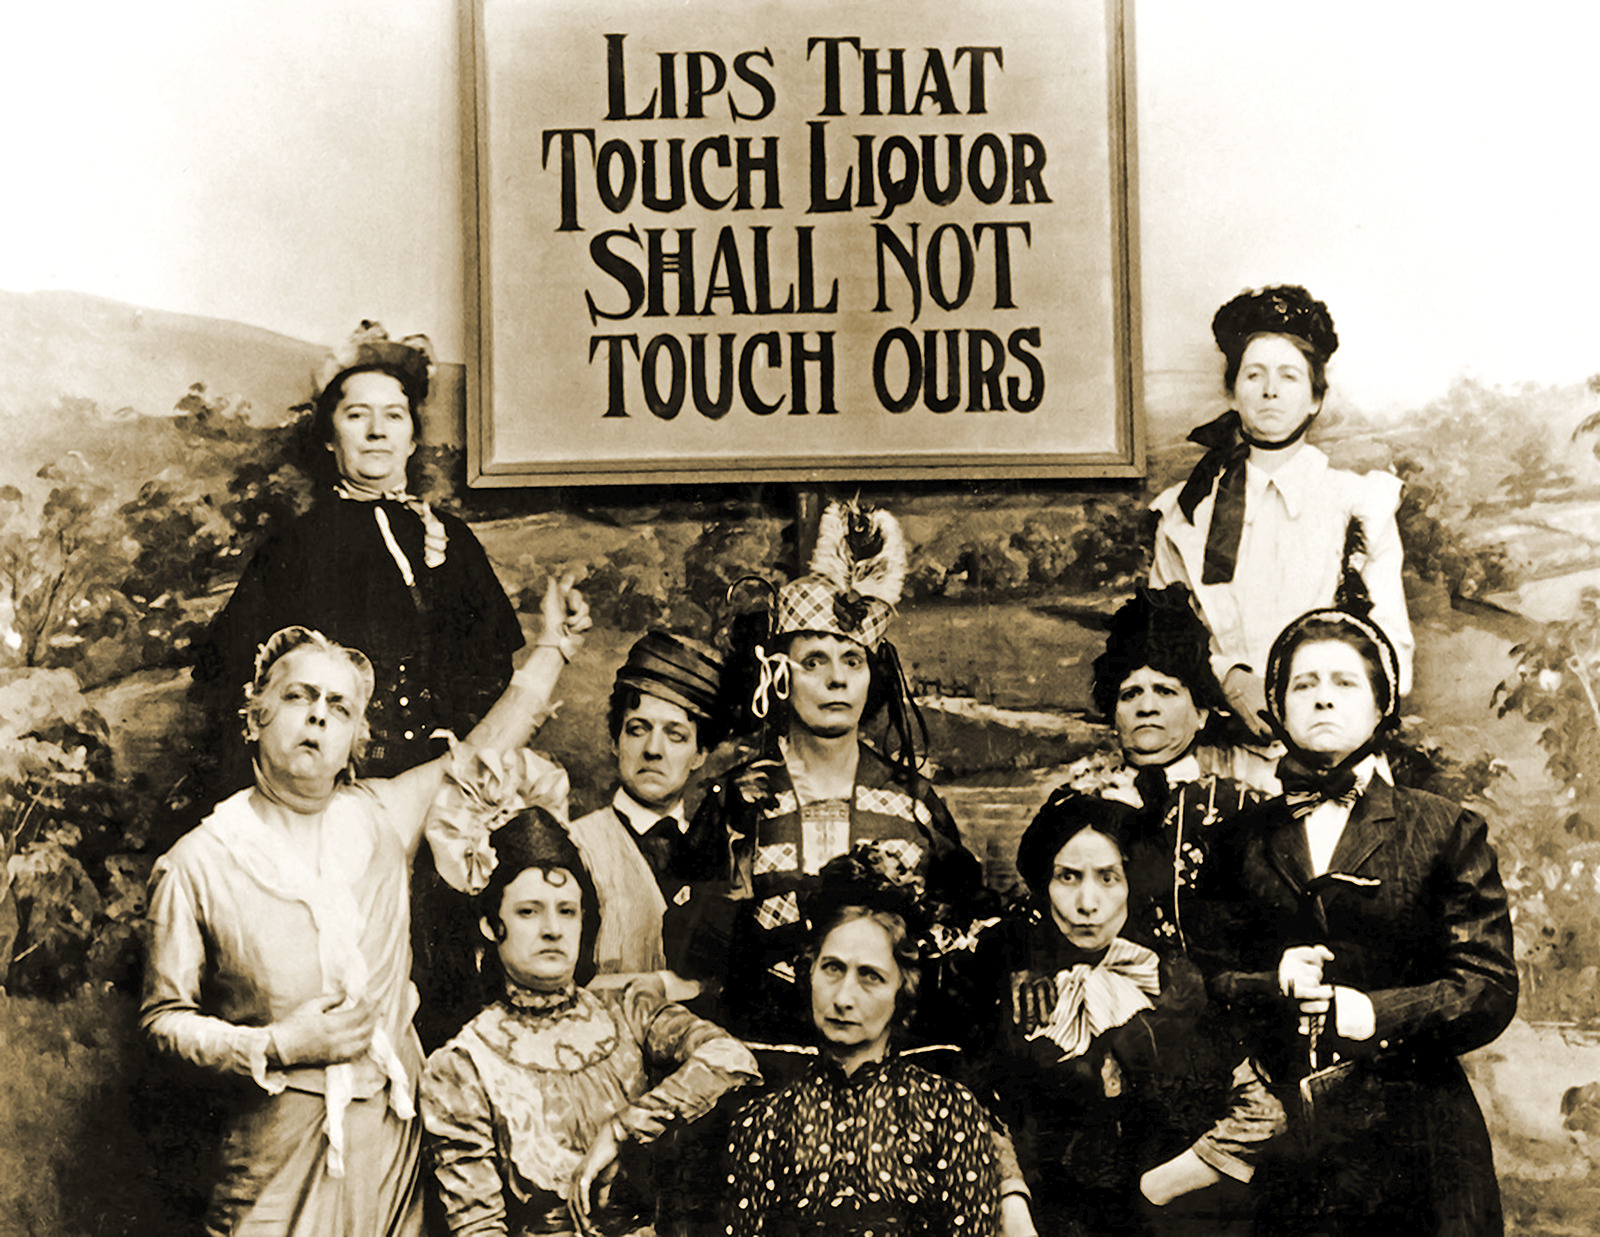 1901 Lips That Touch Liquor Prohibition Vintage Old Photo drunk 5 x 7 Reprint